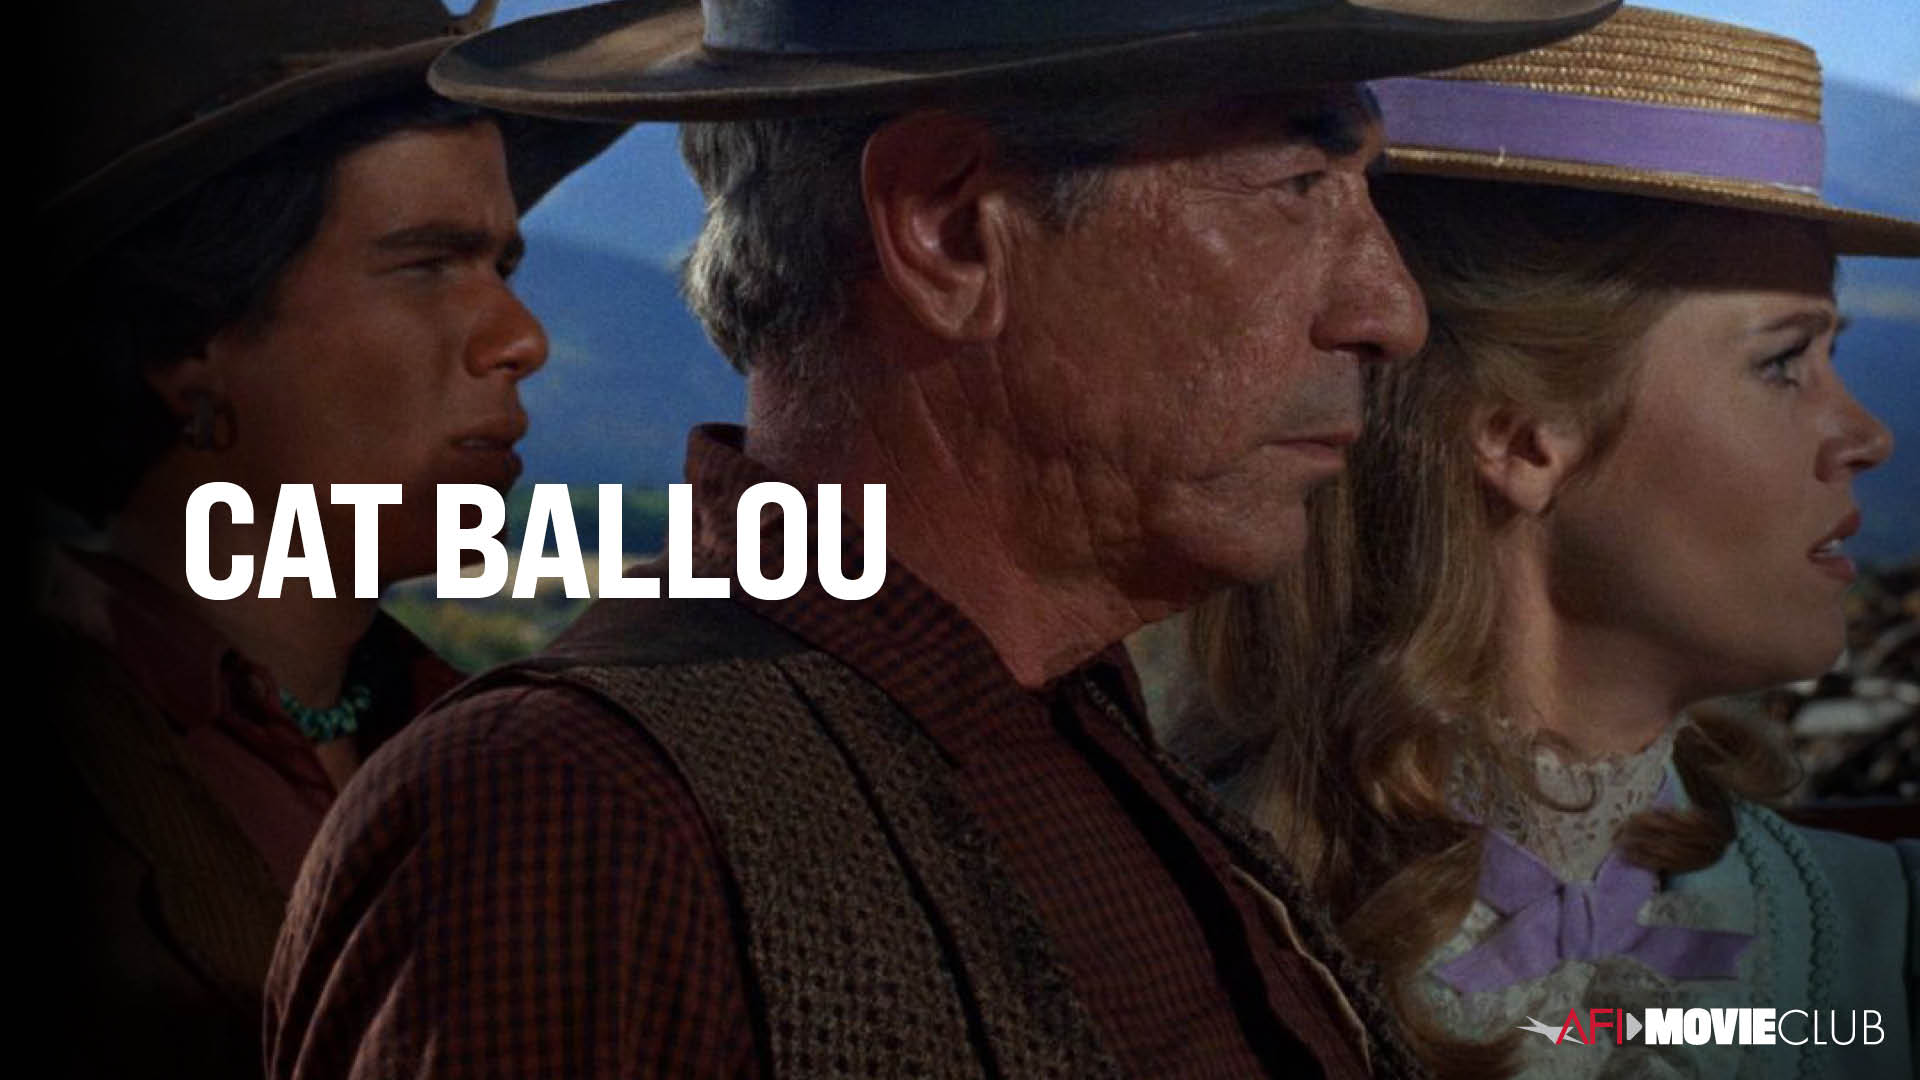 Cat Ballou Film Still - Jane Fonda, Lee Marvin and Tom Nardini